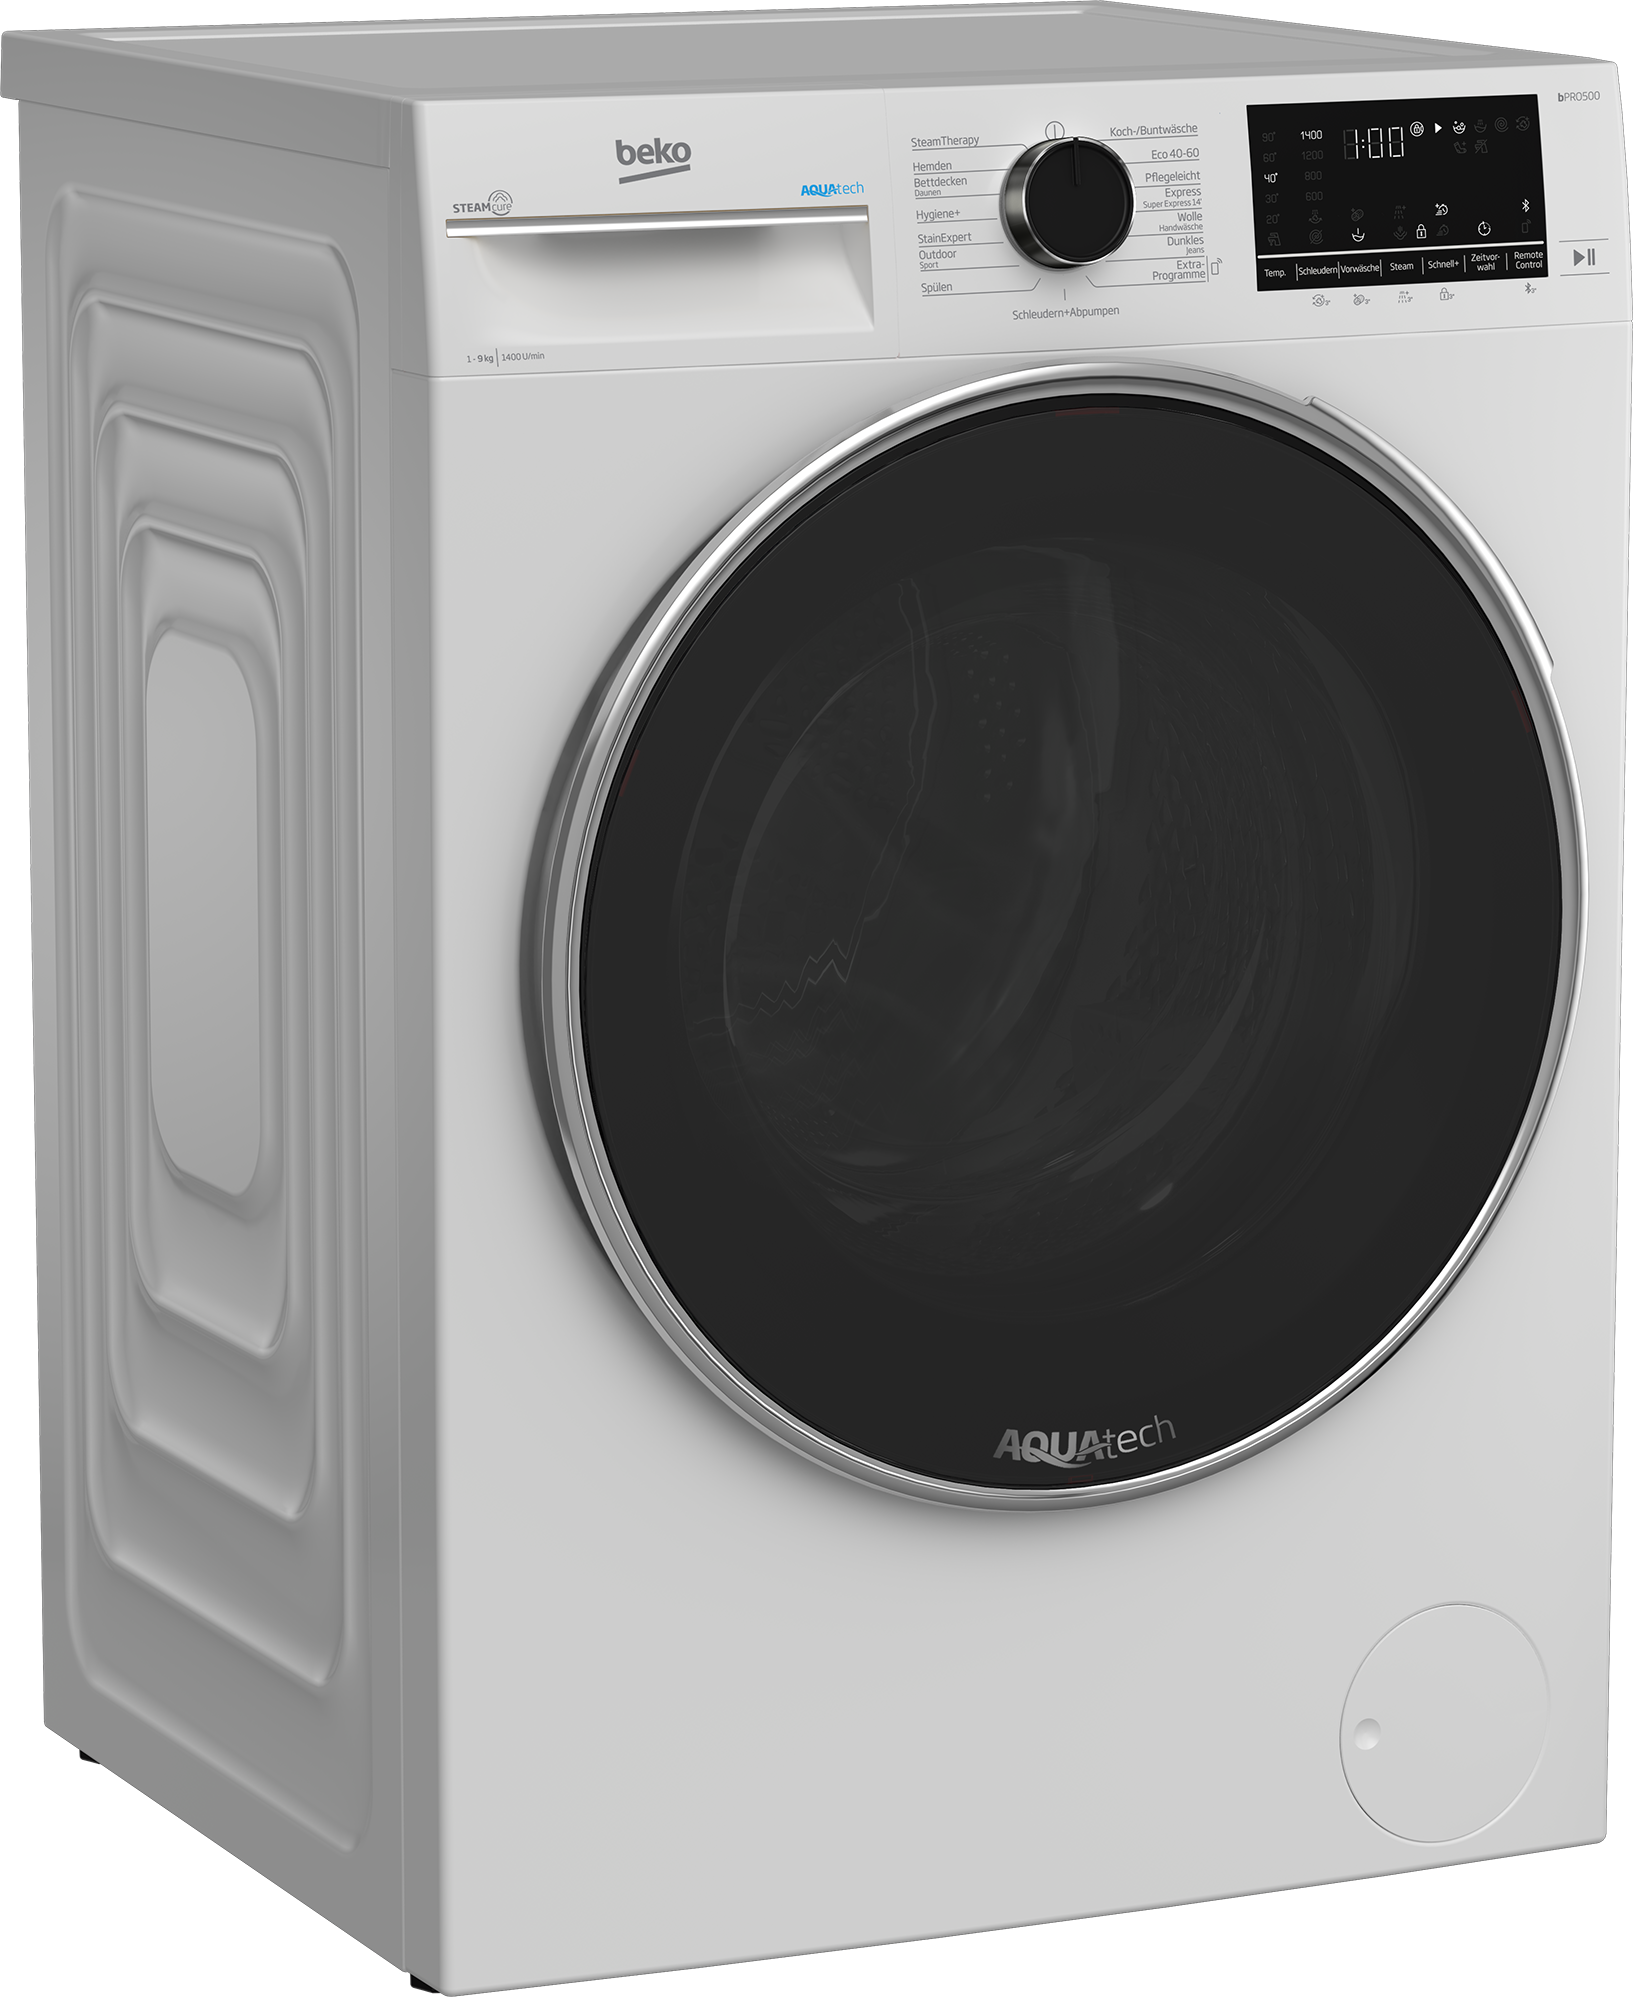 Washing 1400 (9 | Machine B5WFT594138W BEKO | Freestanding rpm) kg,